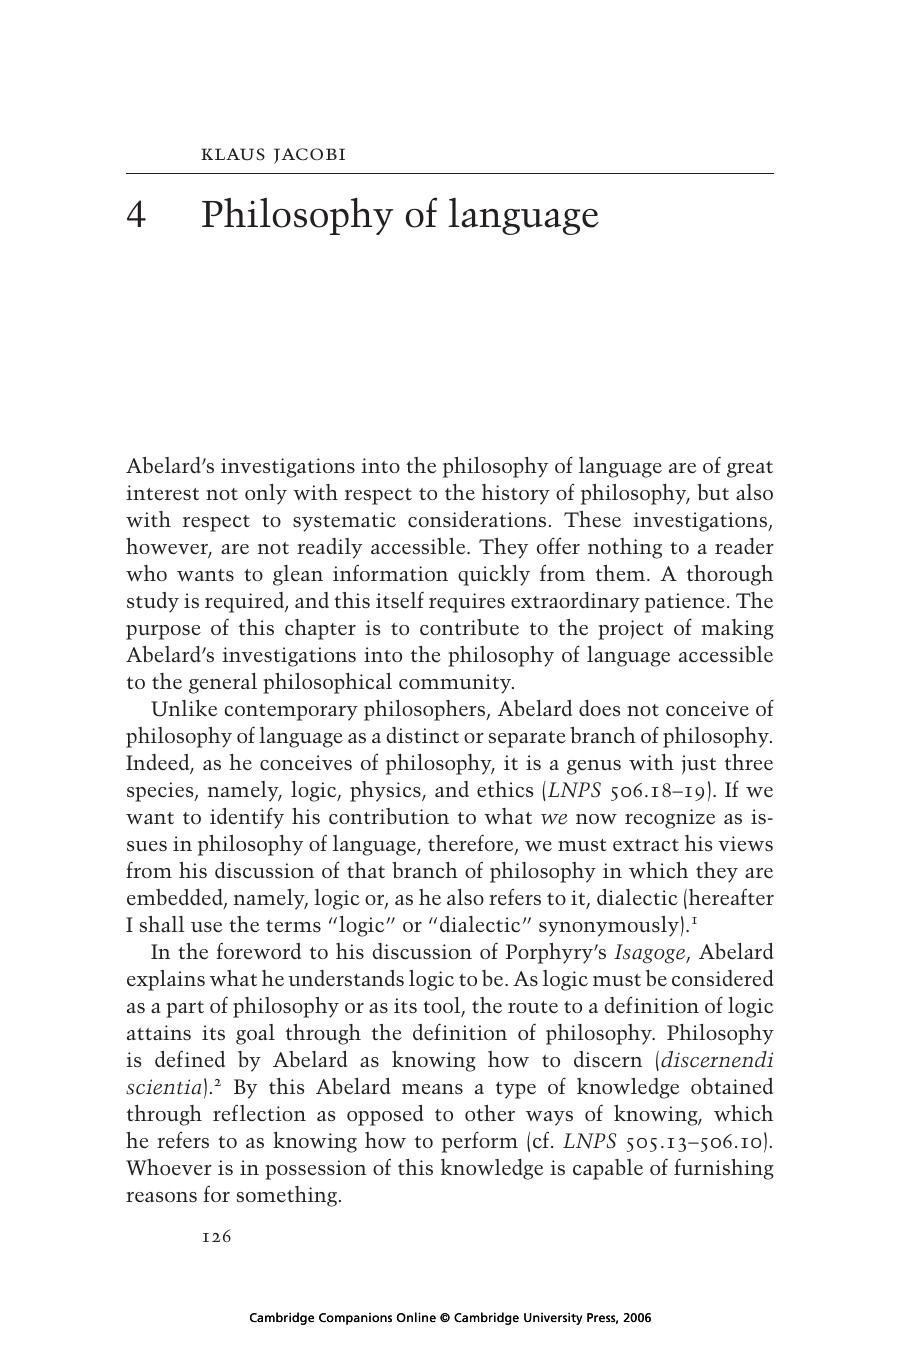 Philosophy of Language - Chapter 4